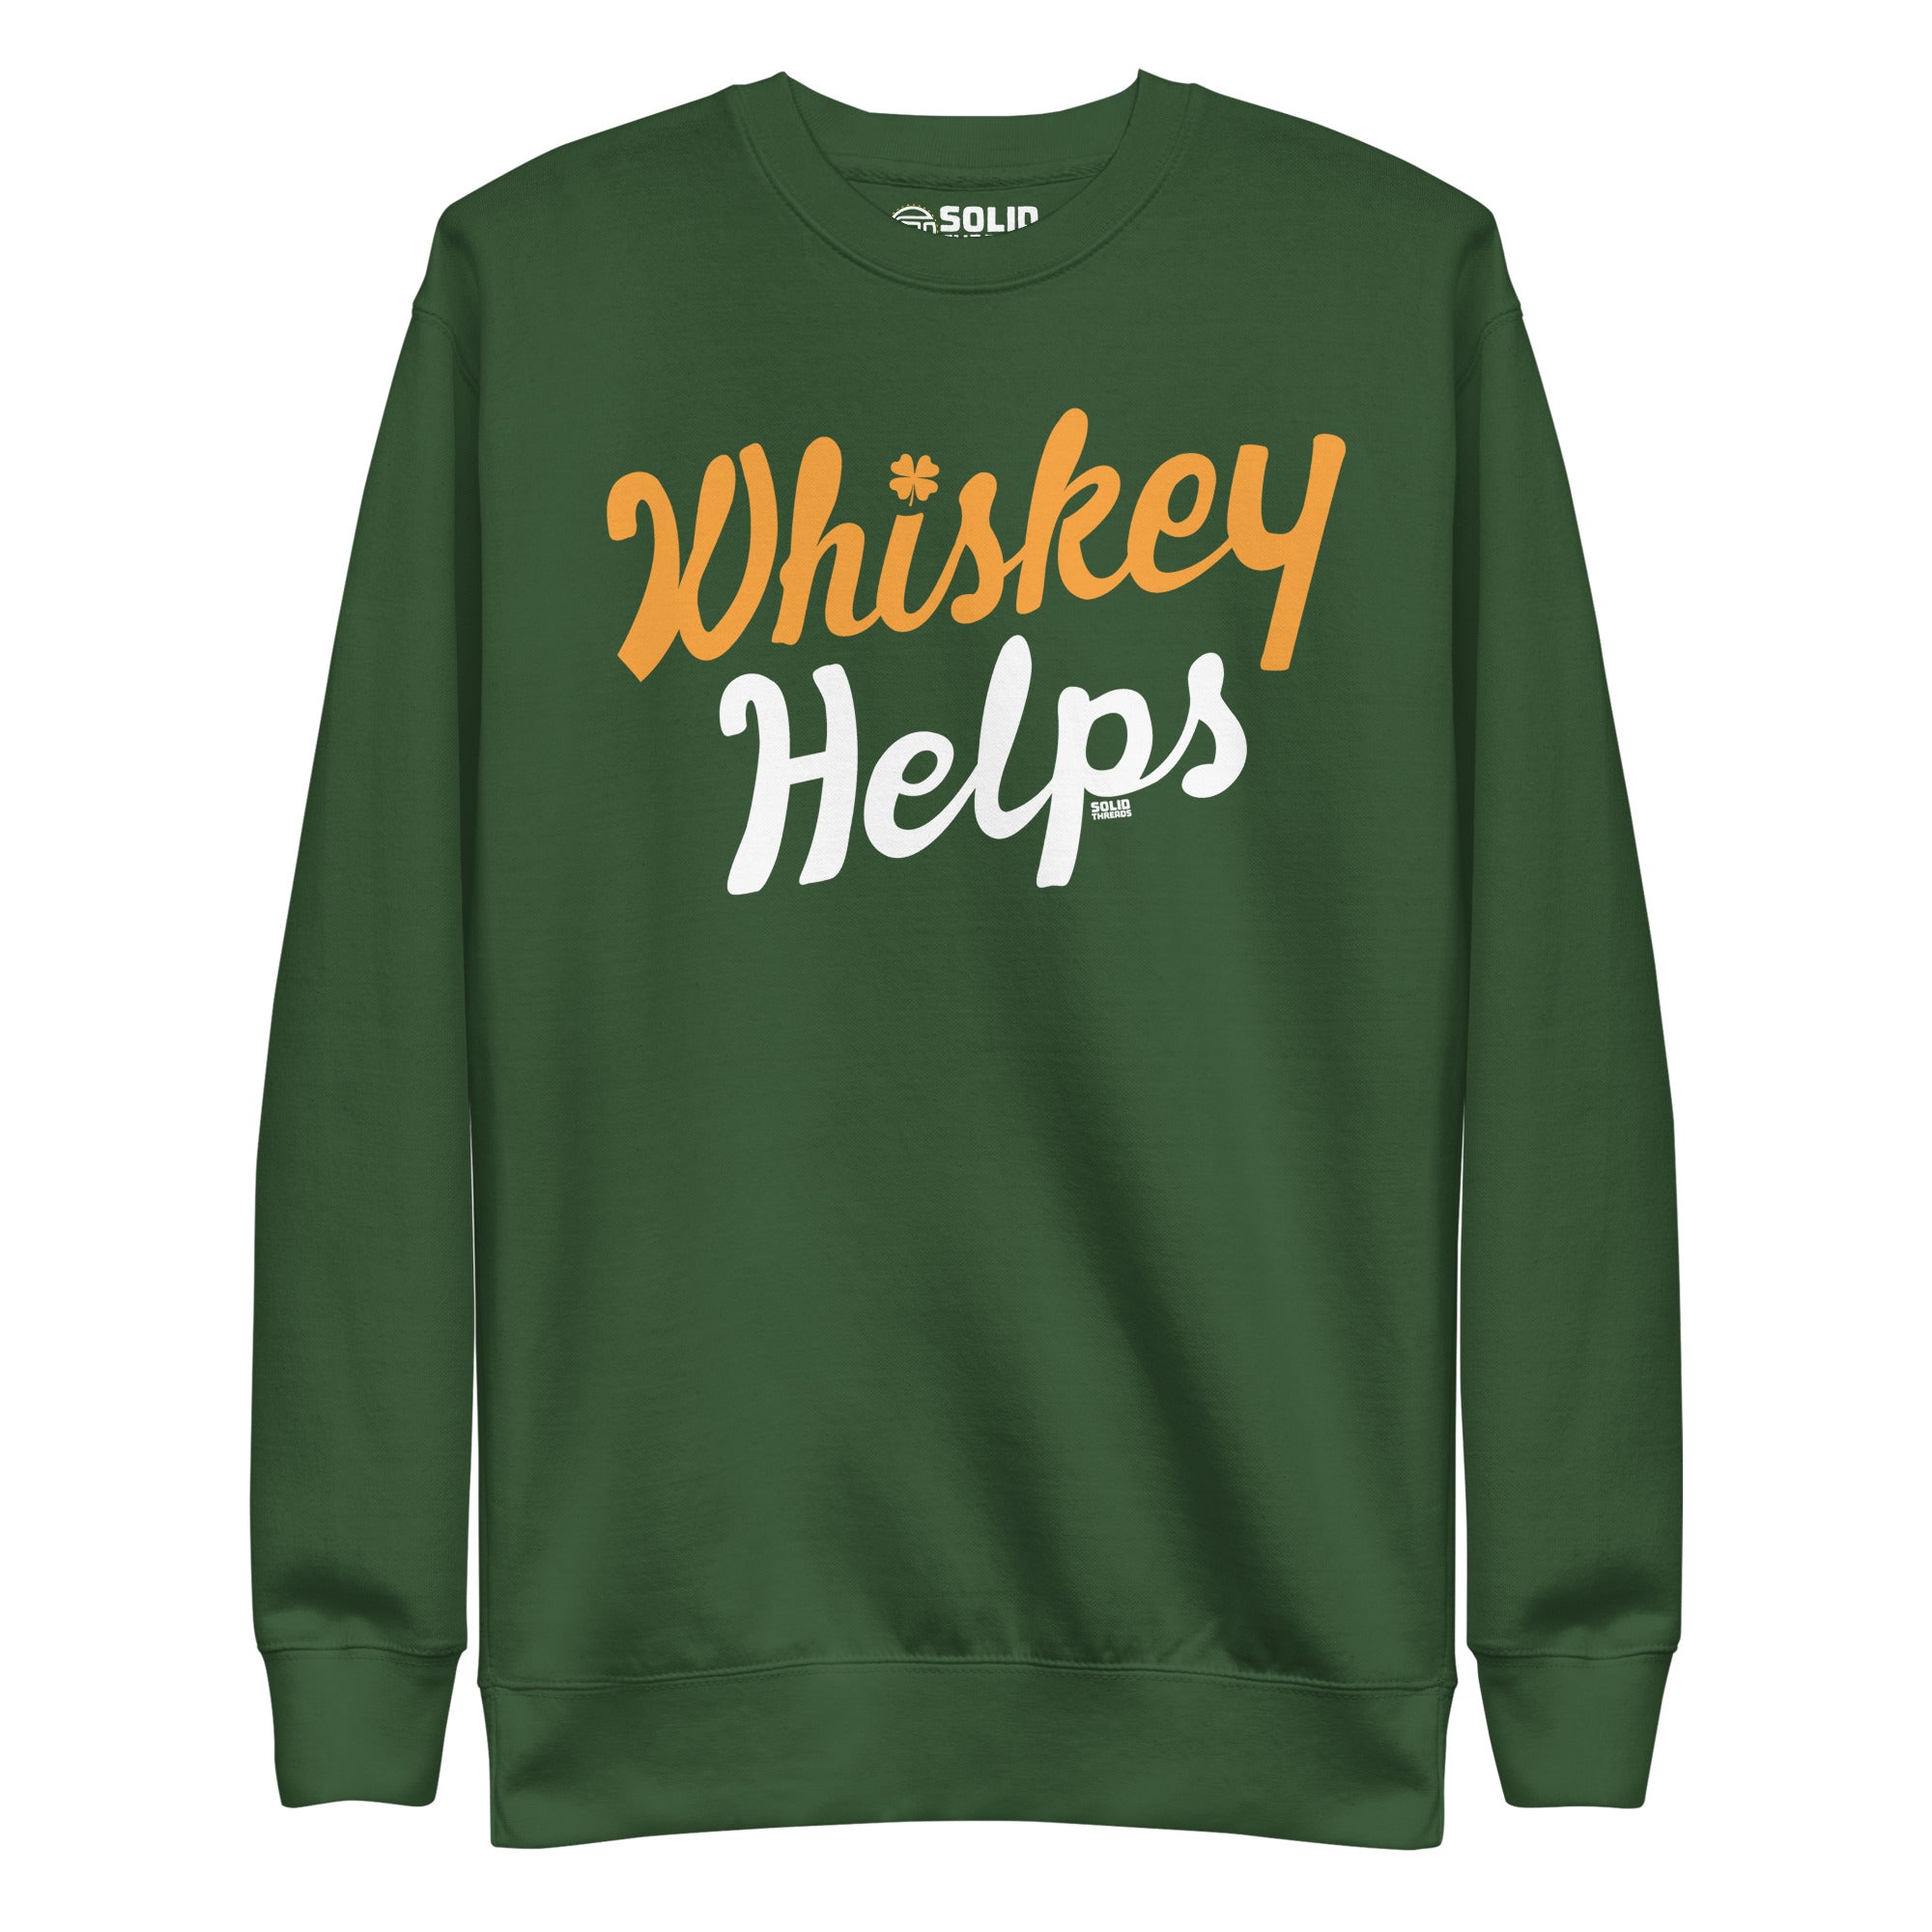 Unisex Irish Whiskey Helps Funny Classic Sweatshirt | Vintage St Paddy's Fleece | Solid Threads